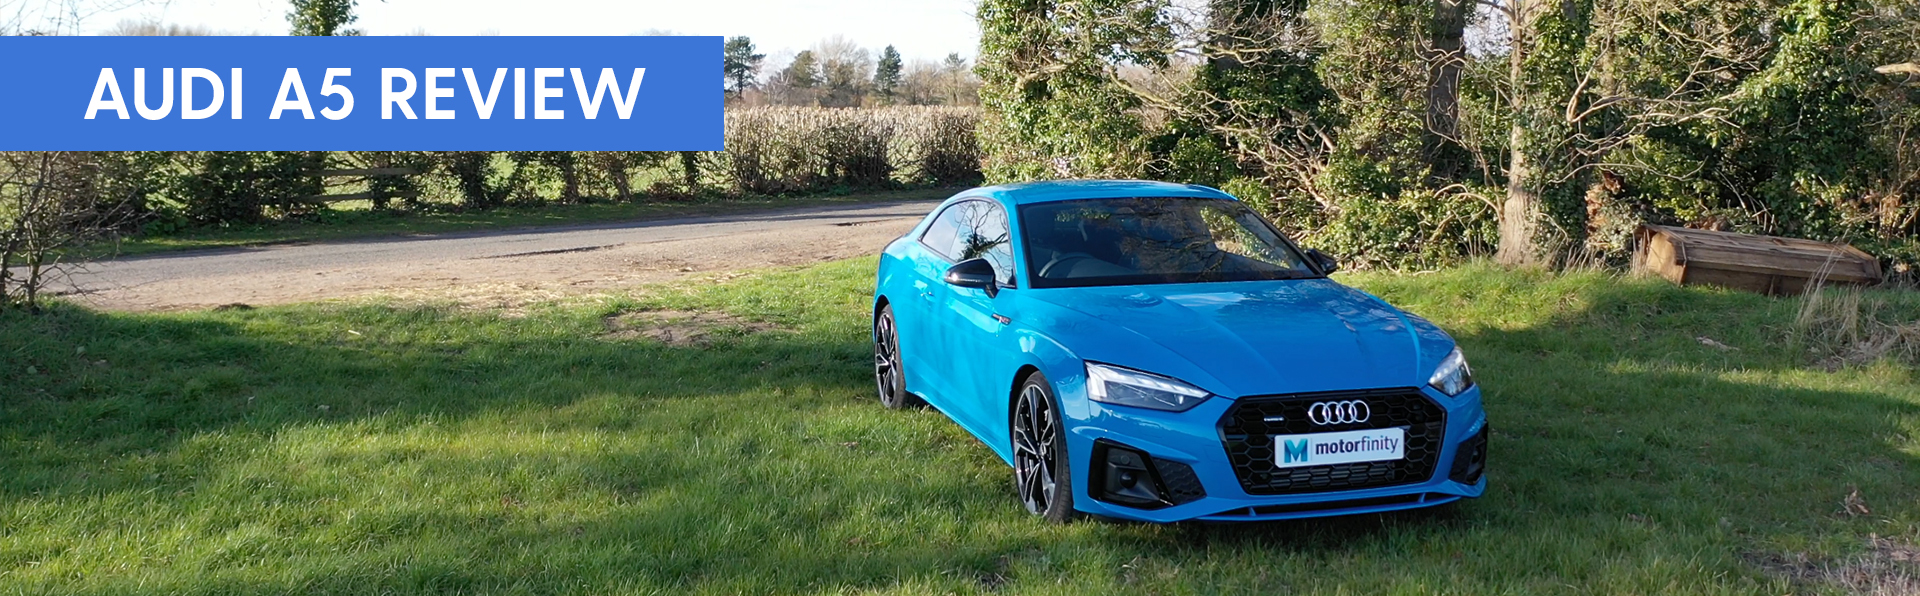 Audi A5 Coupé Edition One [59 Second Review]